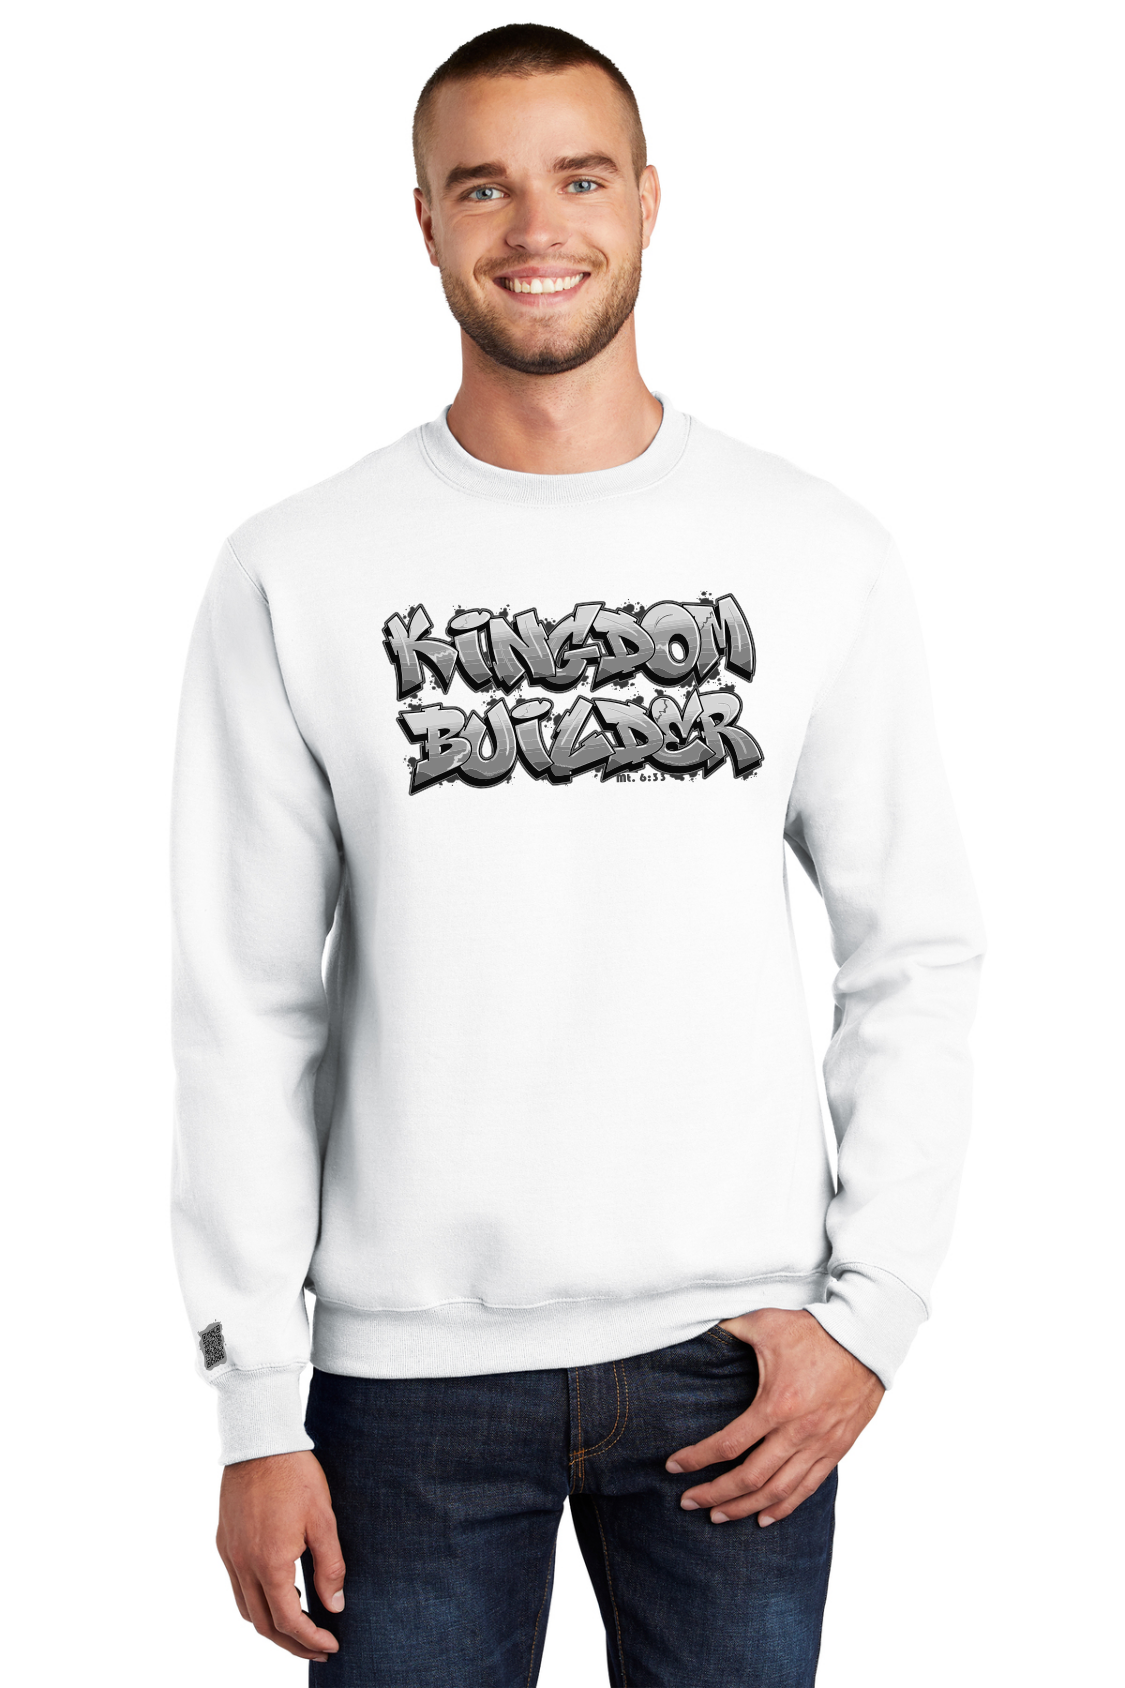 Kingdom Builder - White Sweatshirt - Black/White Graphics